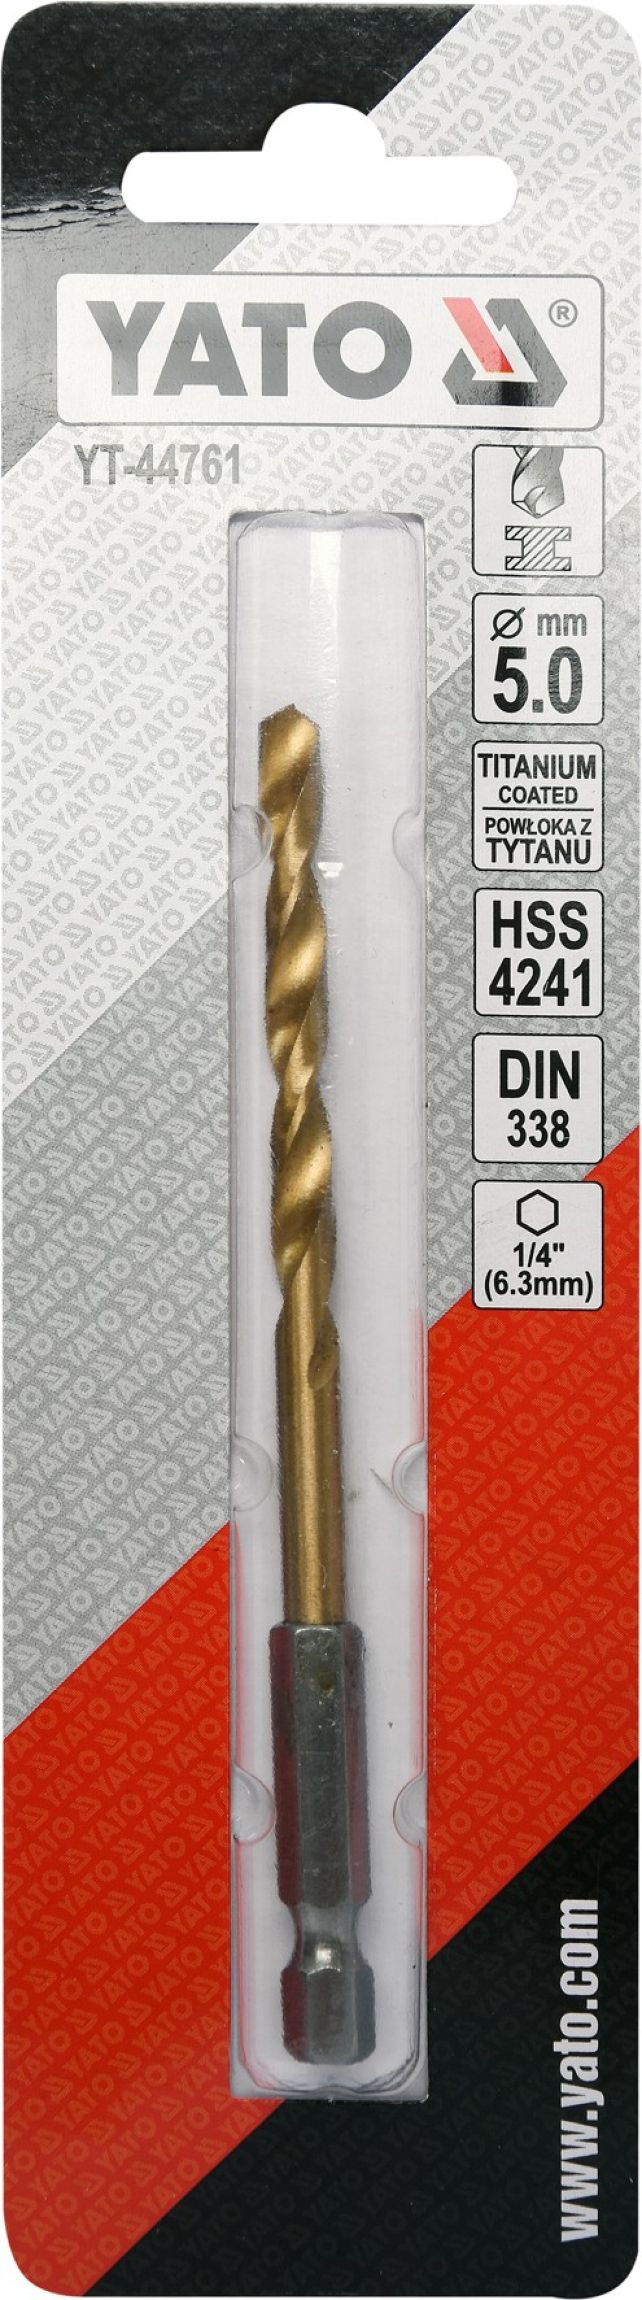 Vrtk do kovu HSS-titan 3,5mm se estihranou stopkou 1/4" Yato YT-44756